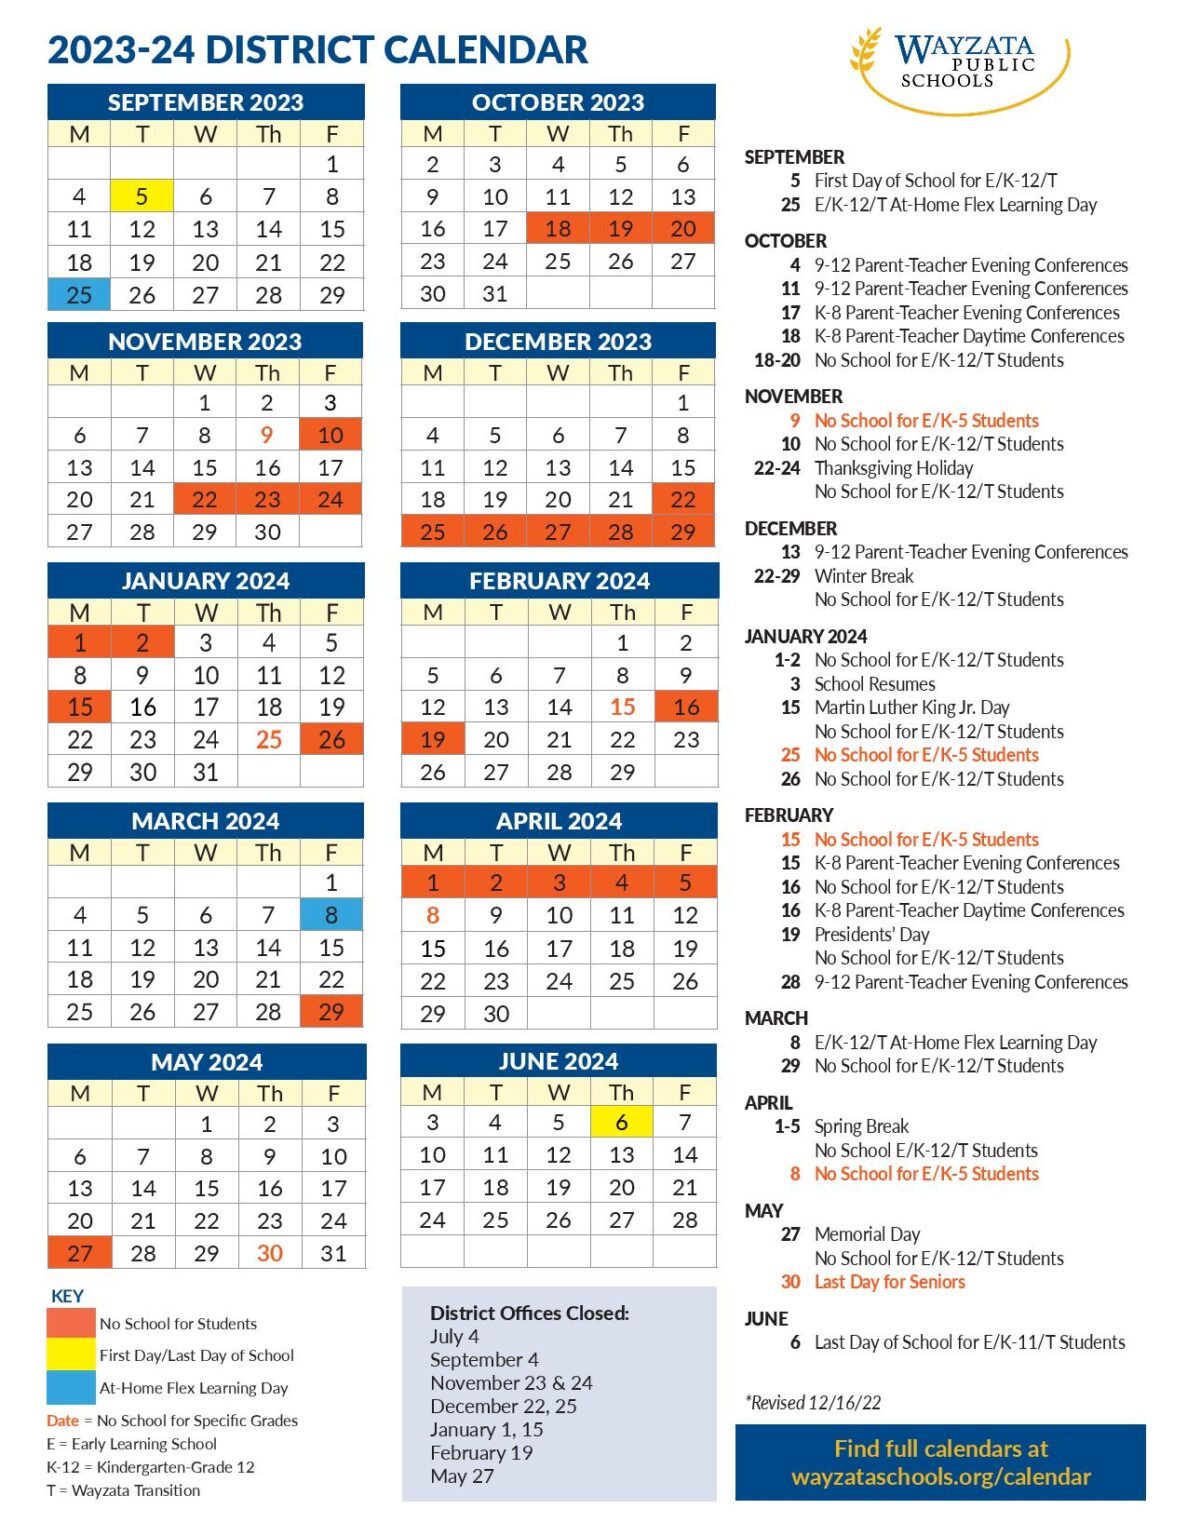 Wayzata Public Schools Calendar 20232024 in PDF